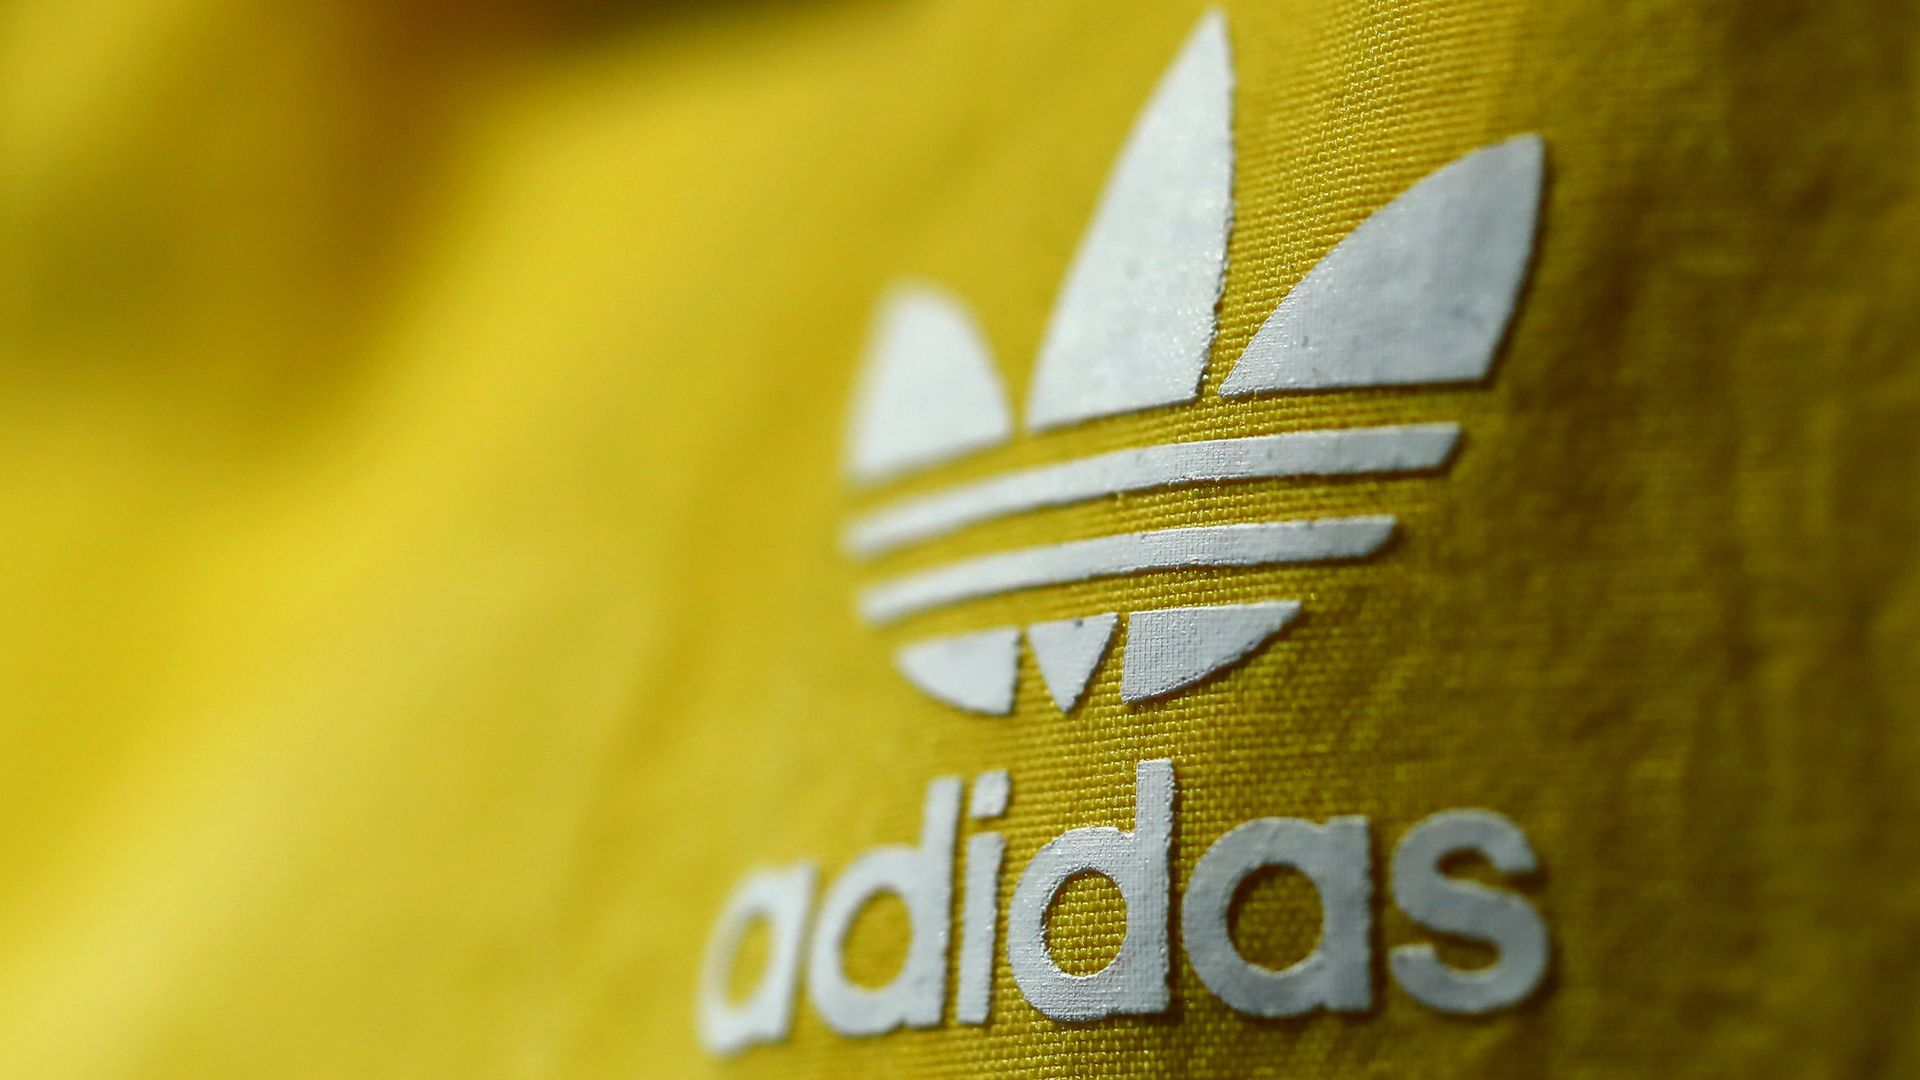 Adidas logo in white on yellow cloth.